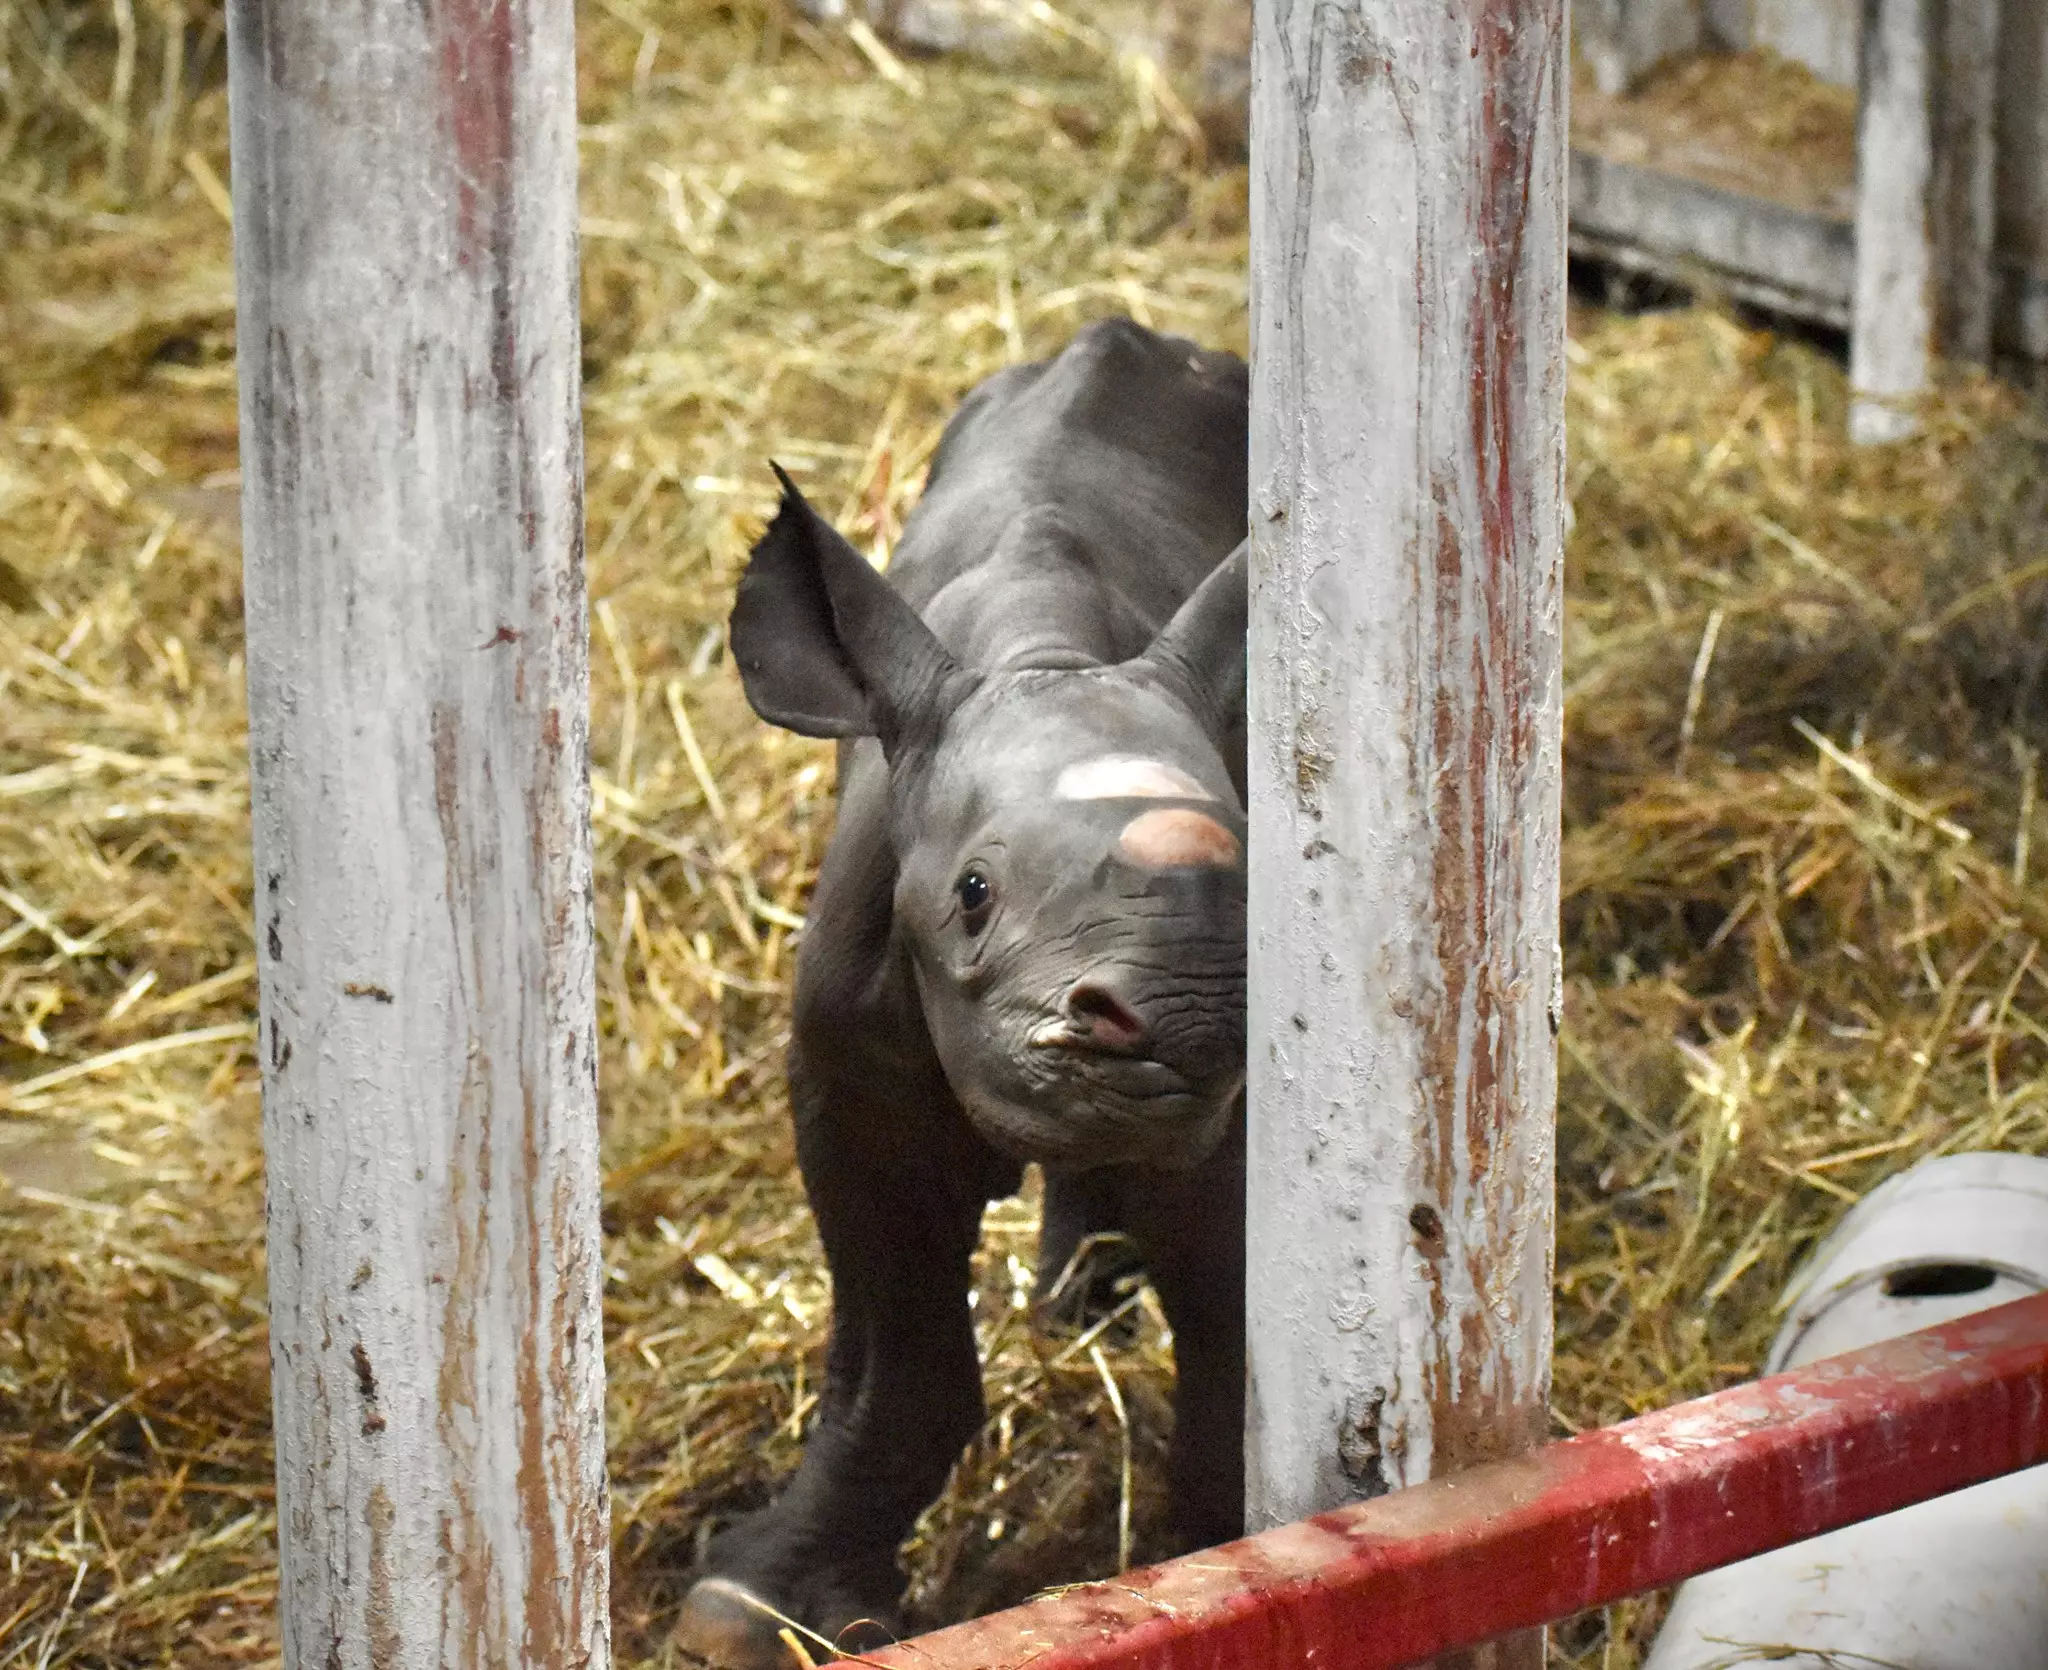 The black rhino calf is doing well.